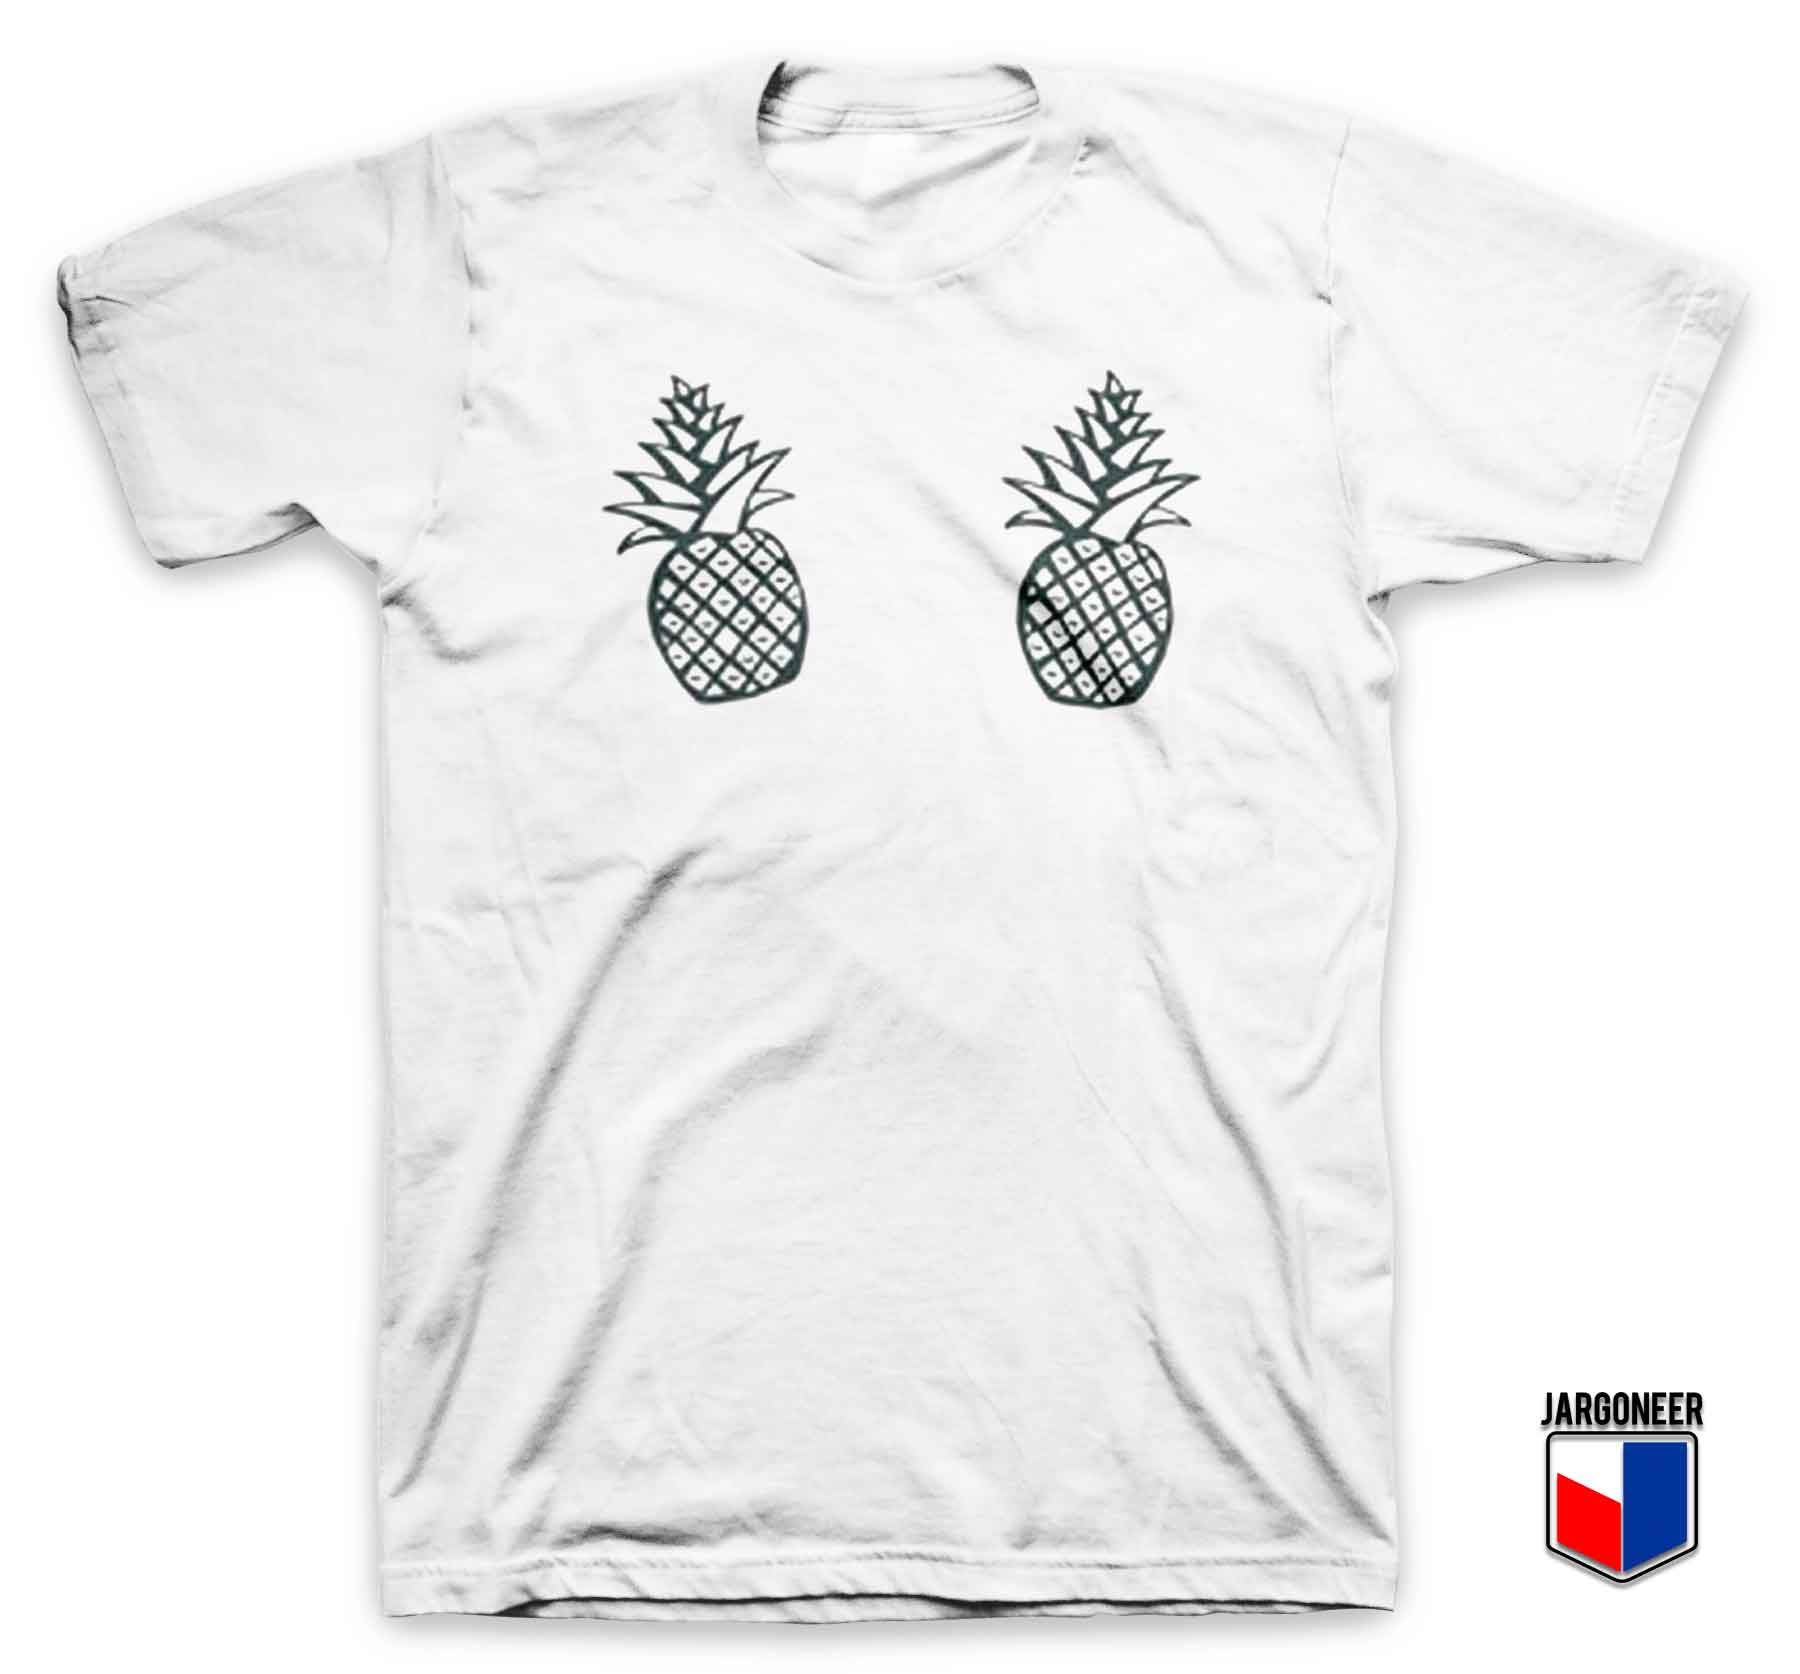 Pineapple Boobs - Shop Unique Graphic Cool Shirt Designs